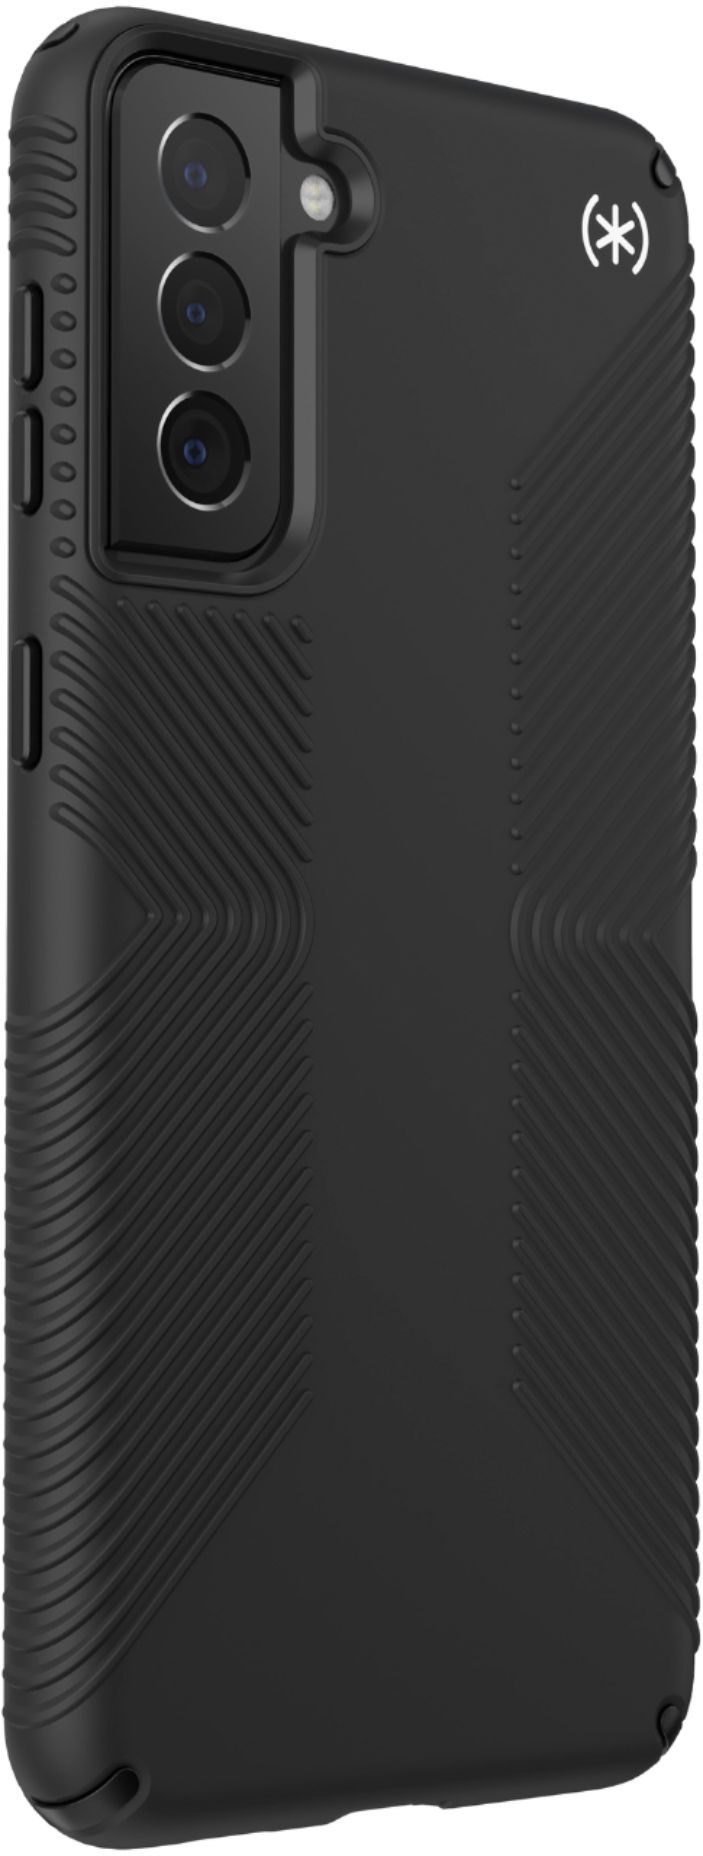 Angle View: Incipio - Grip Case for Samsung Galaxy S21 Ultra 5G - Black